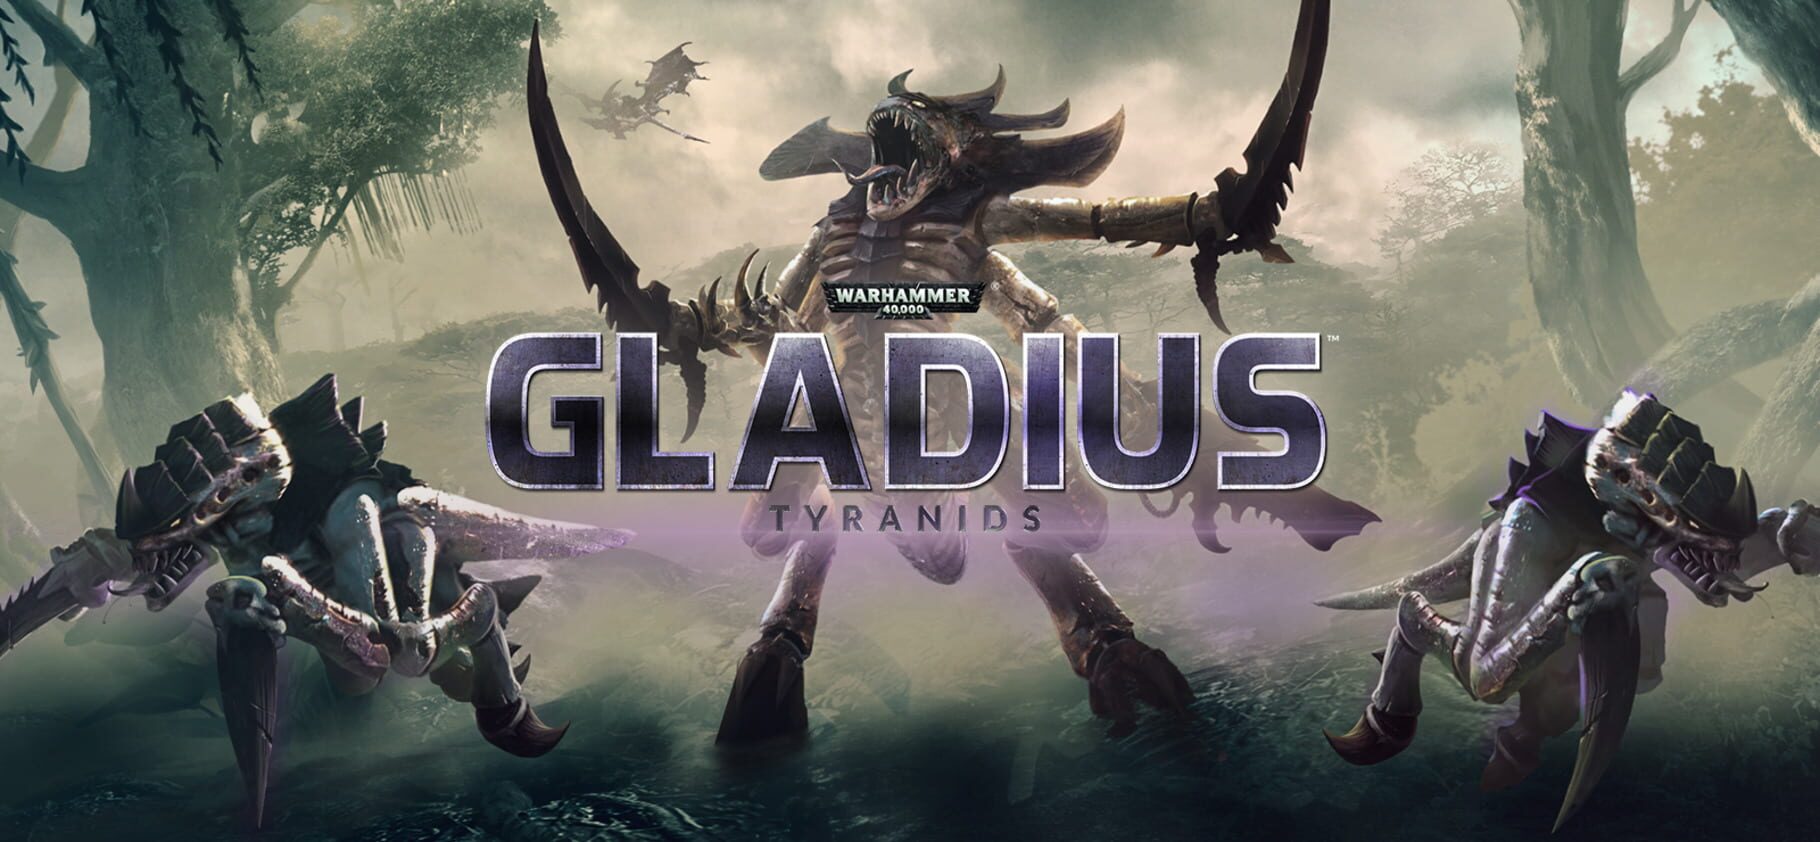 Arte - Warhammer 40,000: Gladius - Tyranids